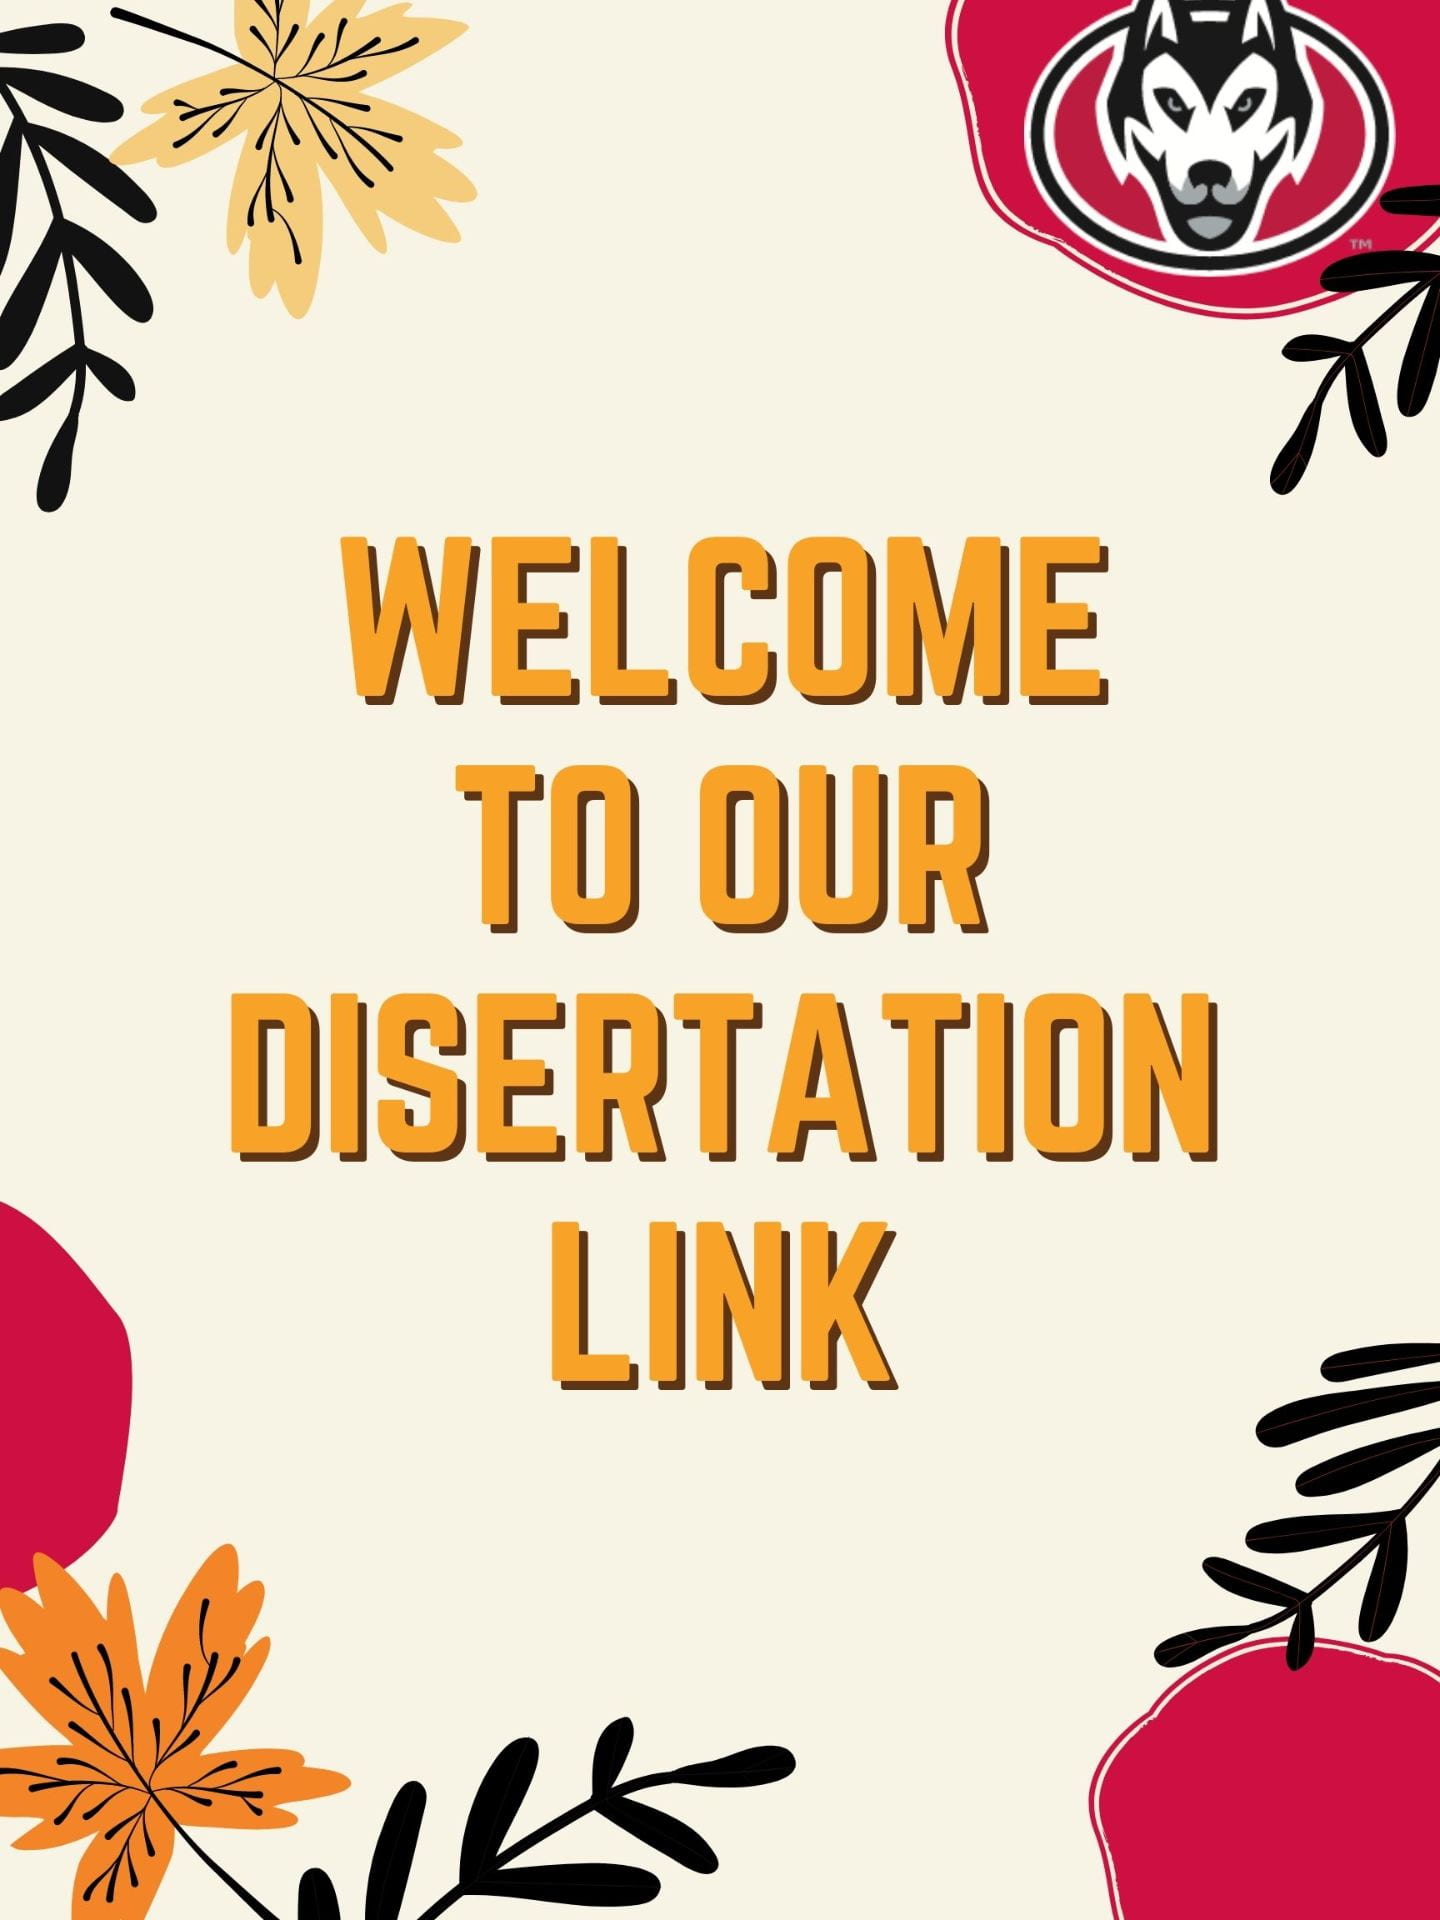 The Dissertation Link!